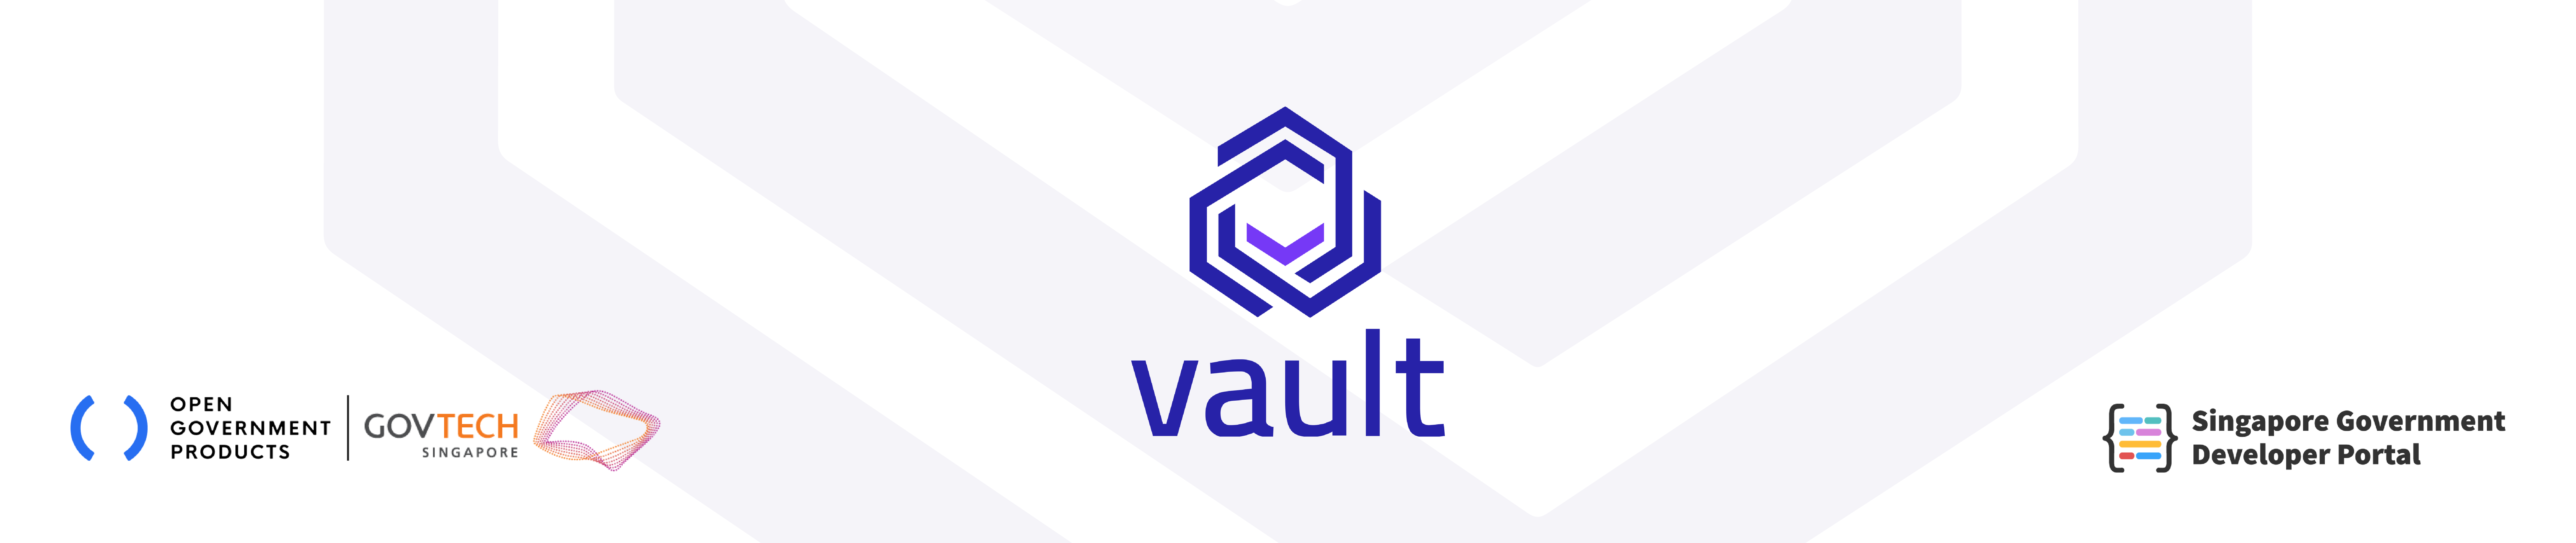 Vault header banner for Singapore Government Developer Portal